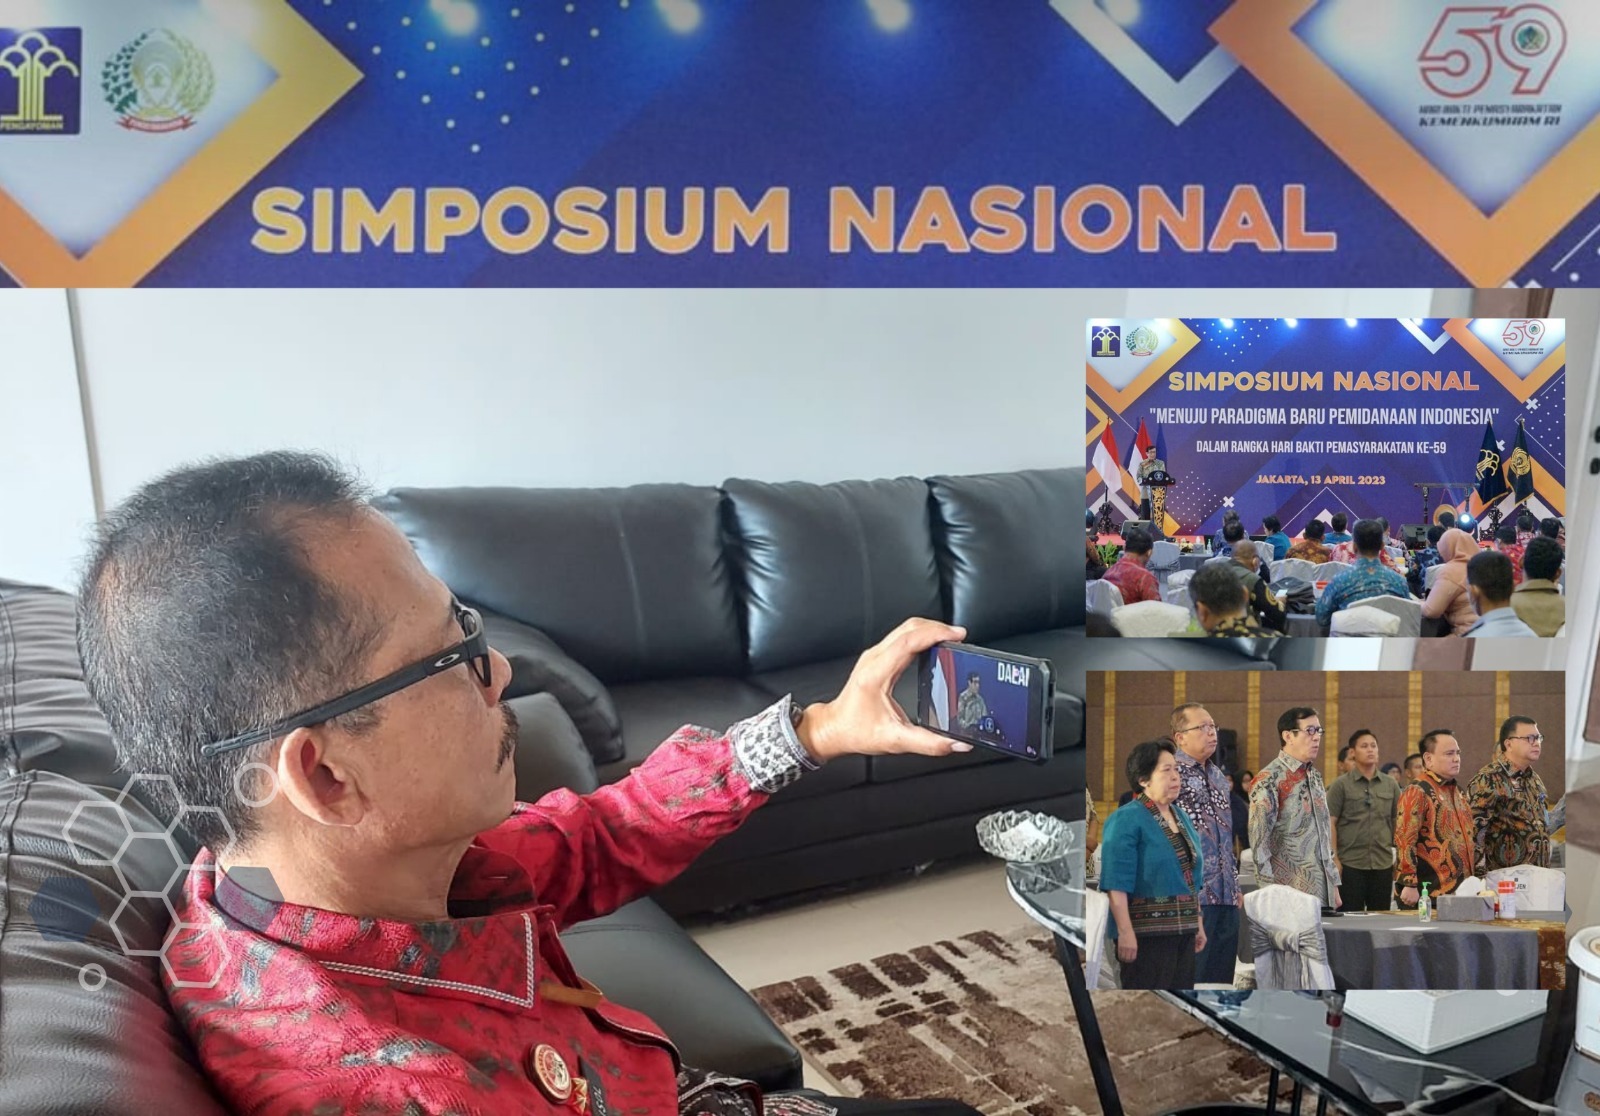 Menuju Paradigma Baru Pemidanaan Indonesia, Arahan Menkumham pada Simposium Nasional HBP-59